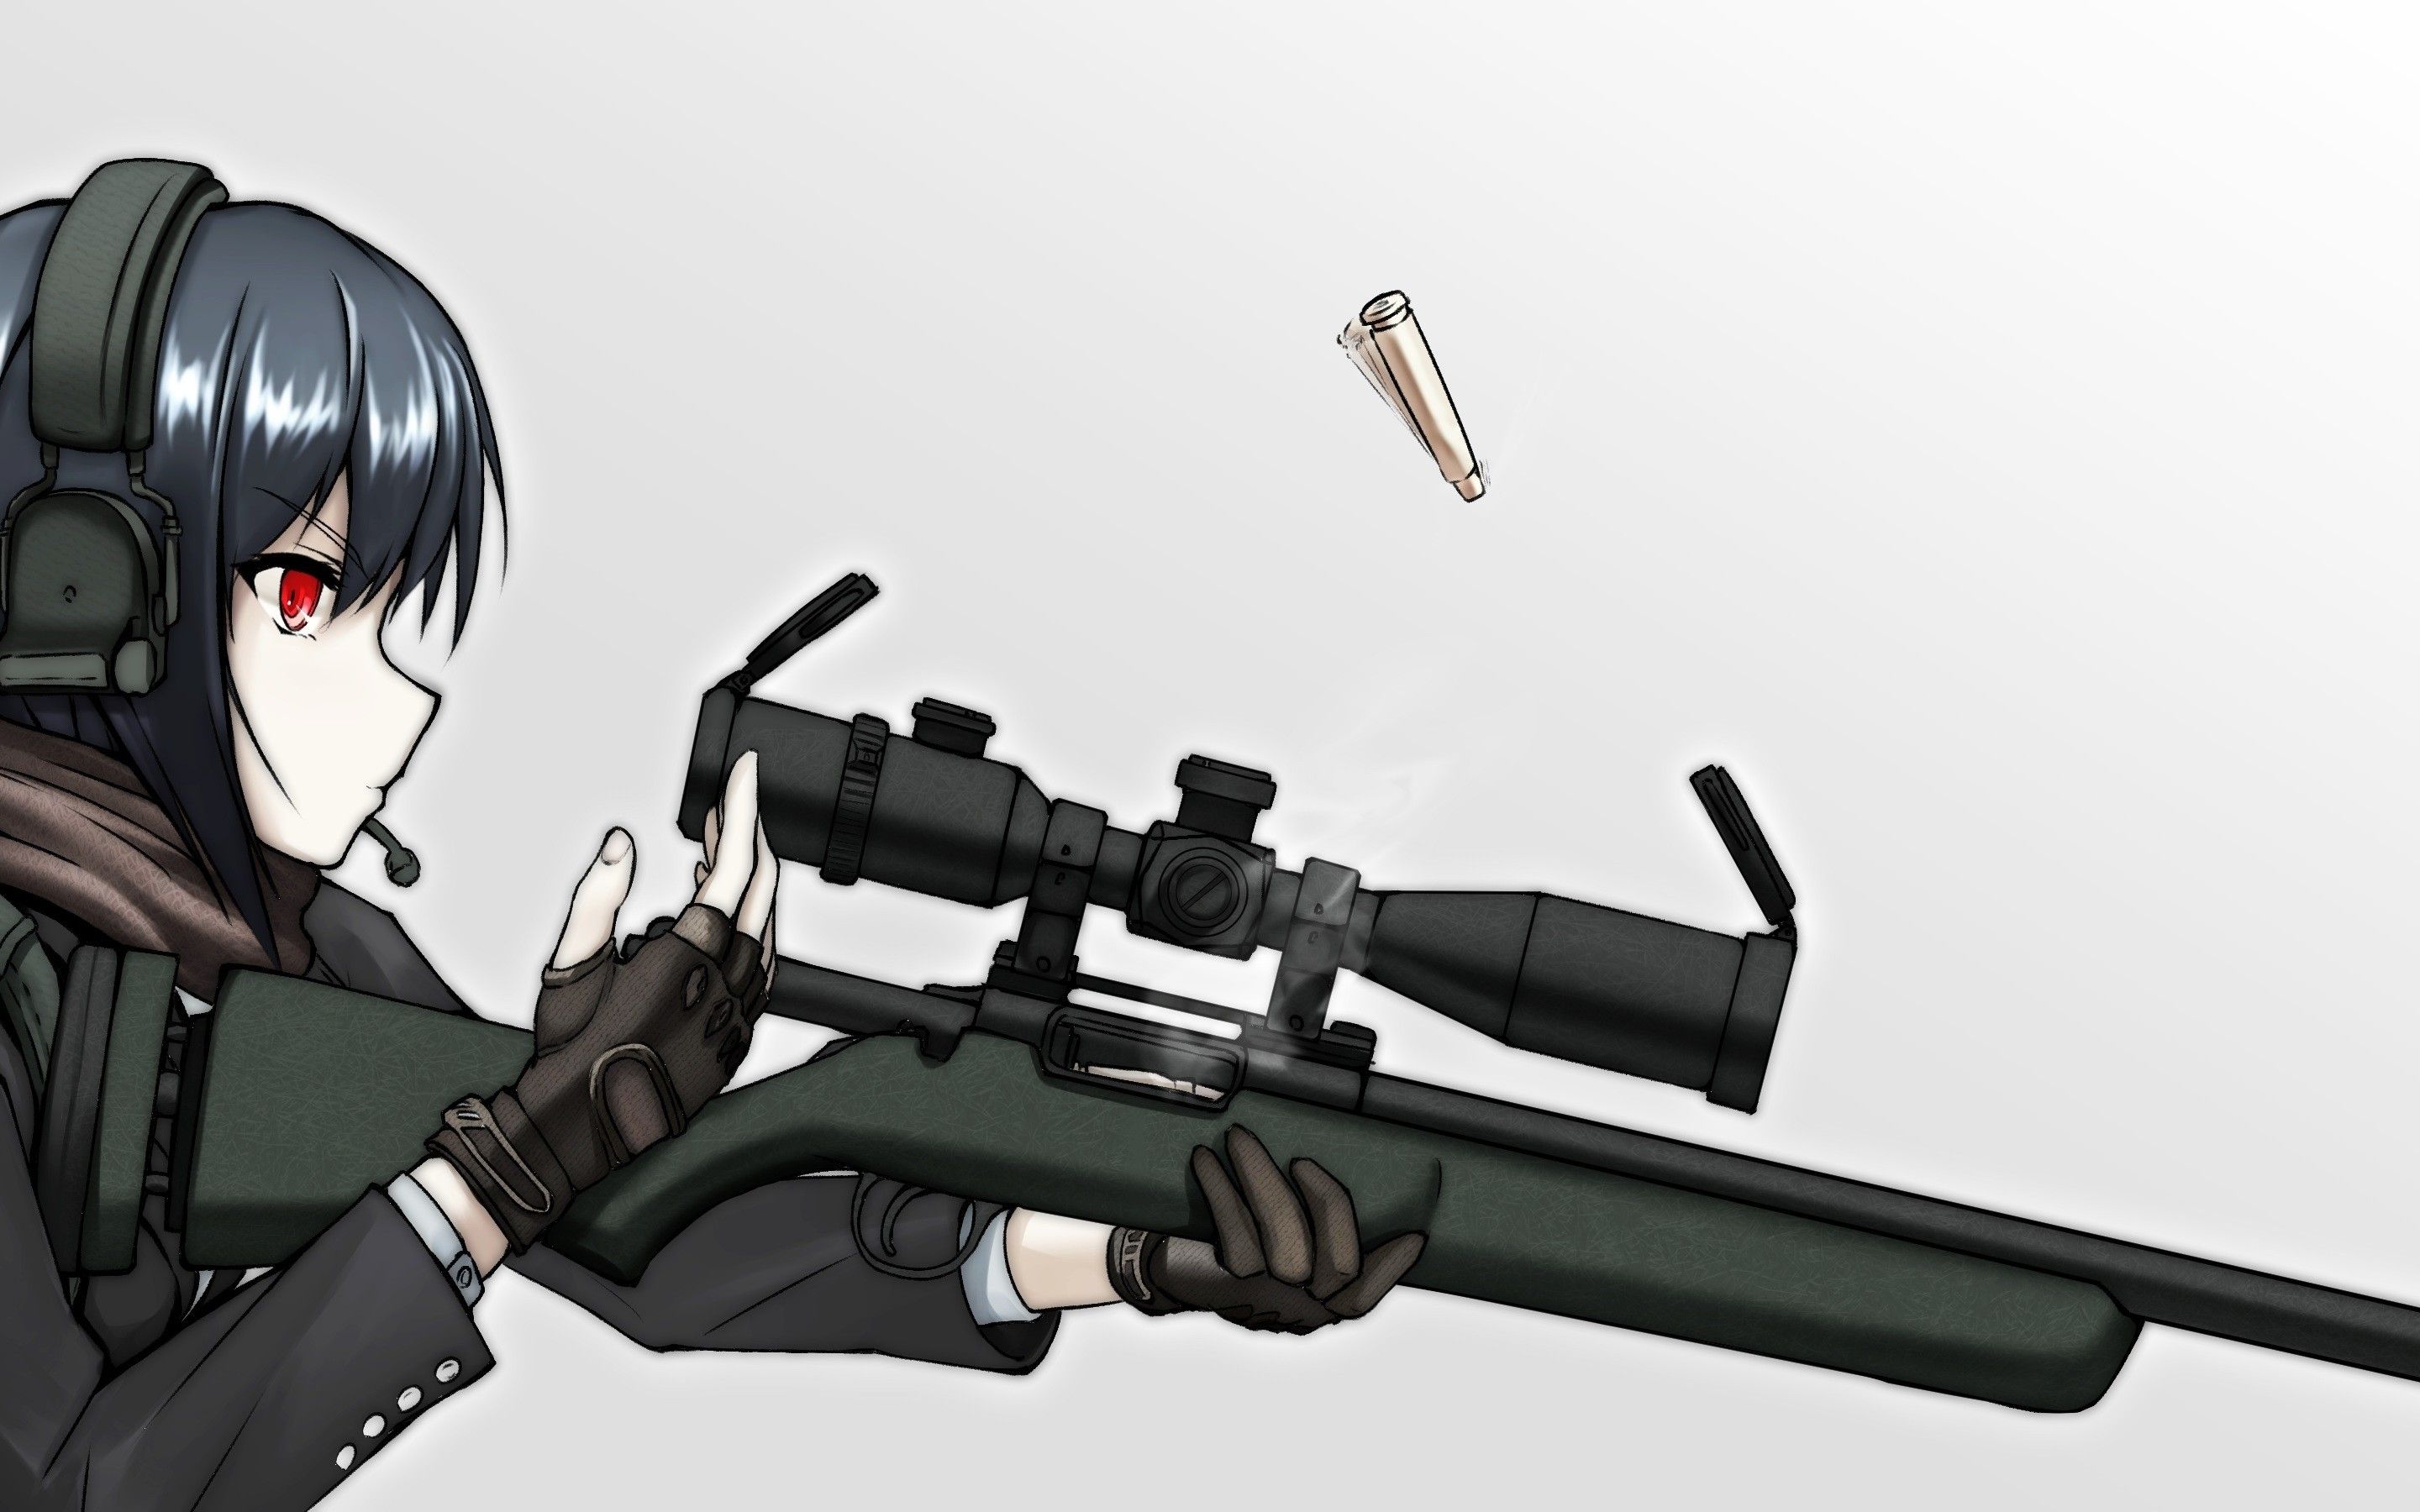 Download 2880x1800 Anime Girl, Sniper, Headphones, Profile View